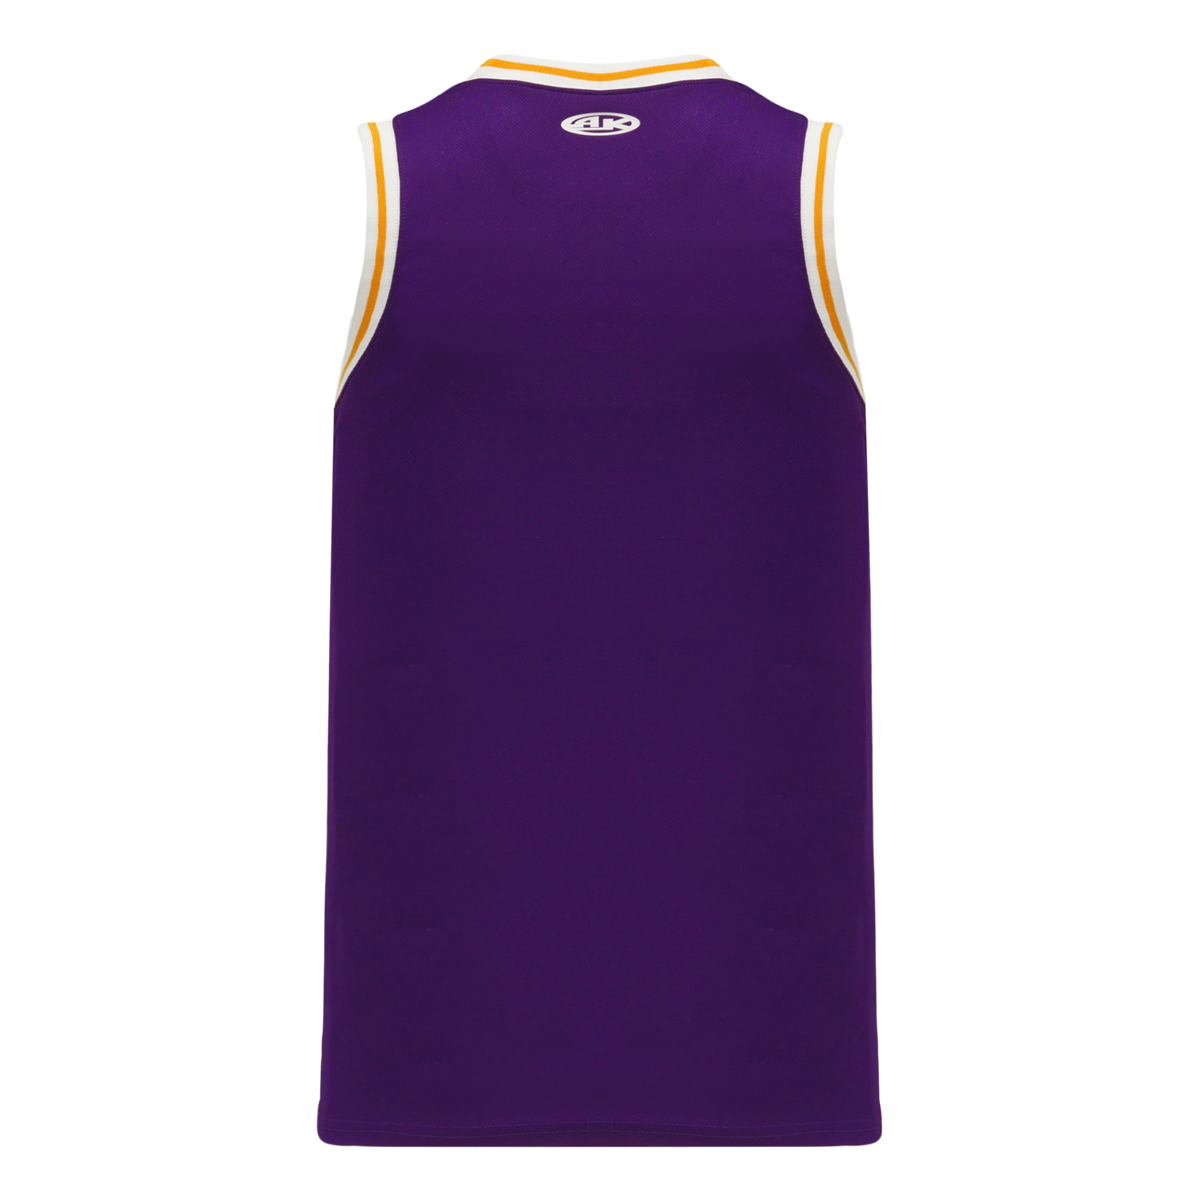 Athletic Knit (AK) B1715A-435 Adult LA Lakers Gold Pro Basketball